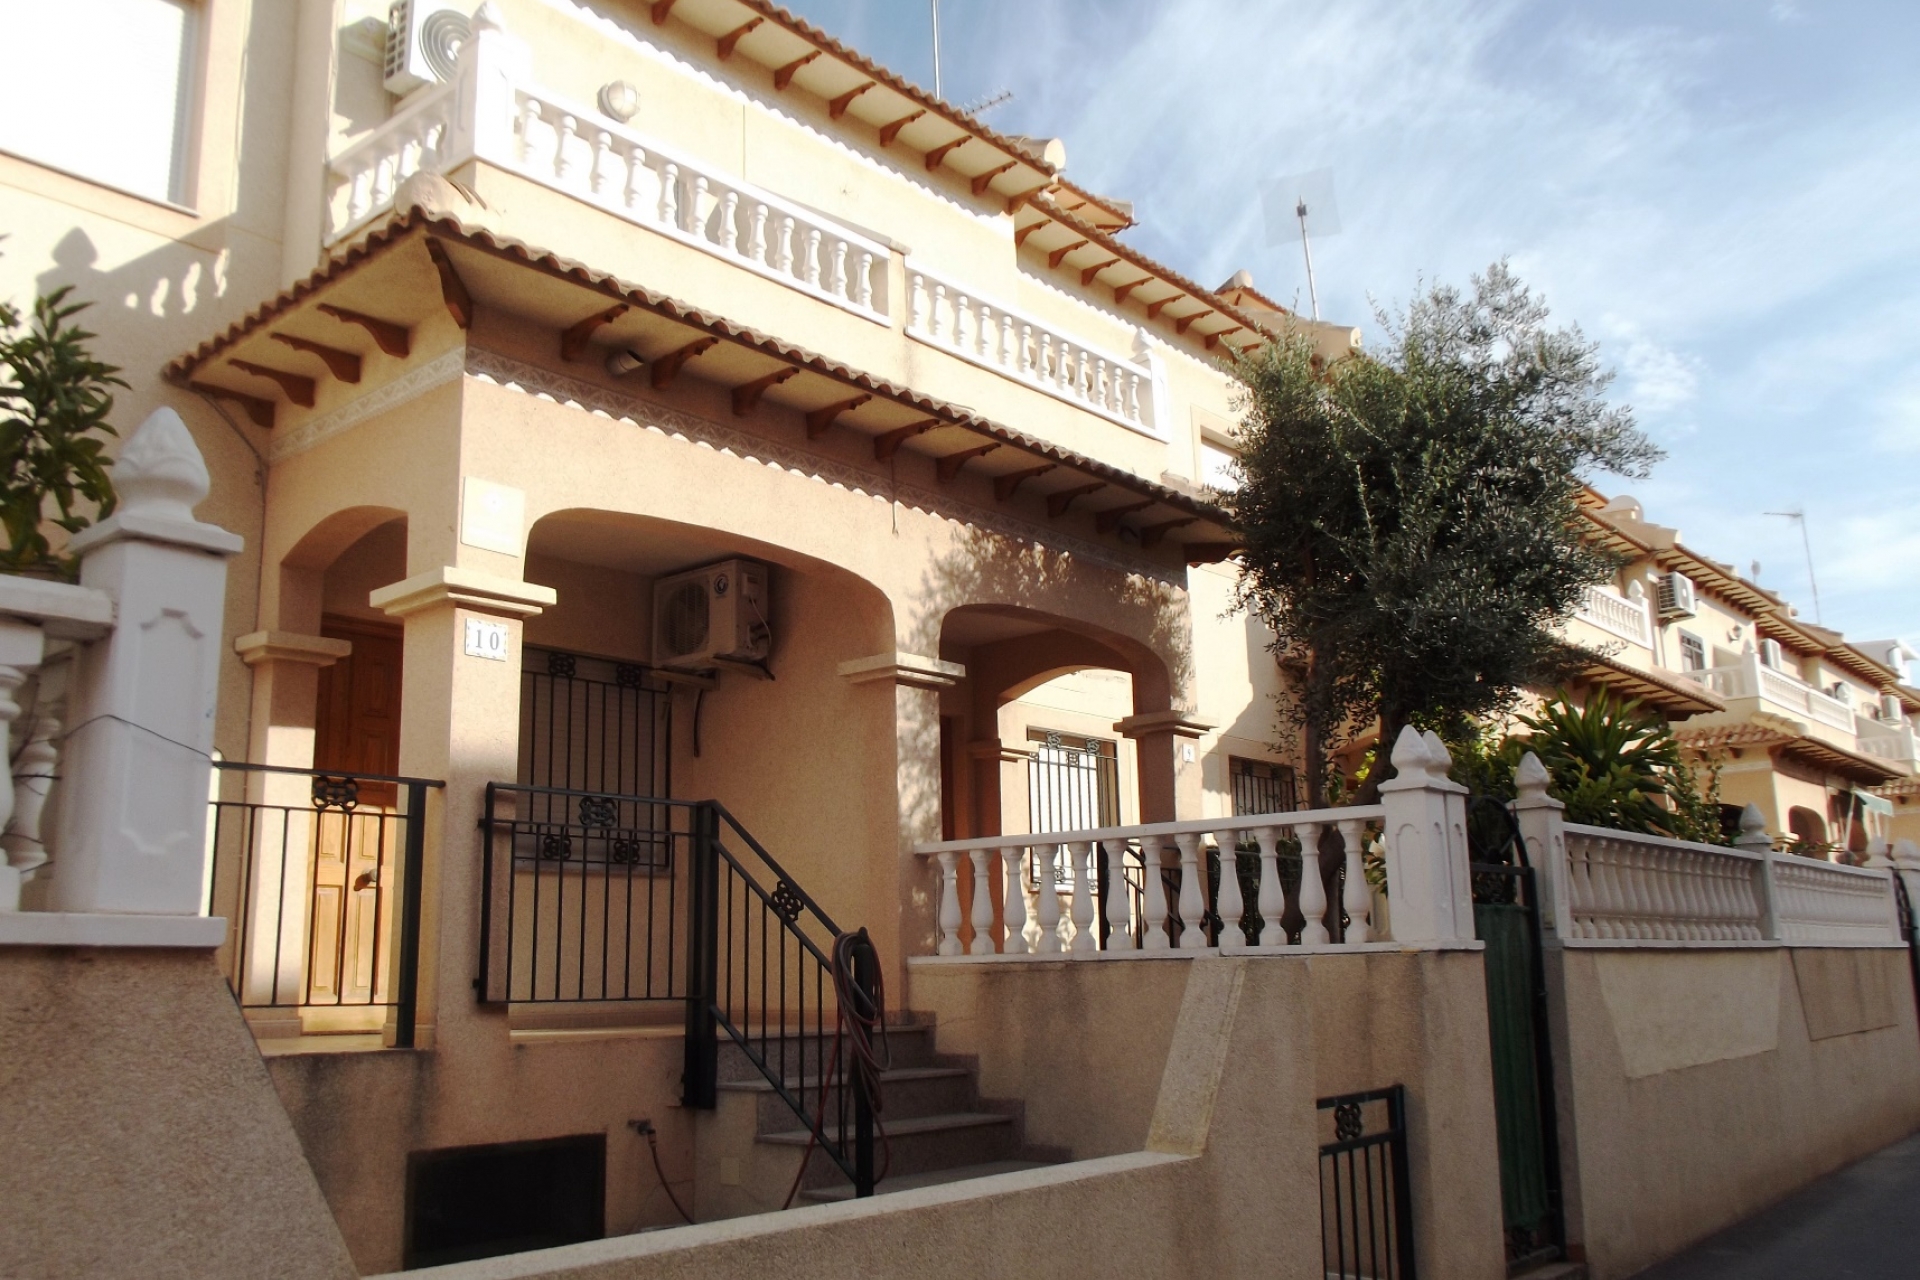 Property Sold - Townhouse for sale - Torrevieja - El Salado